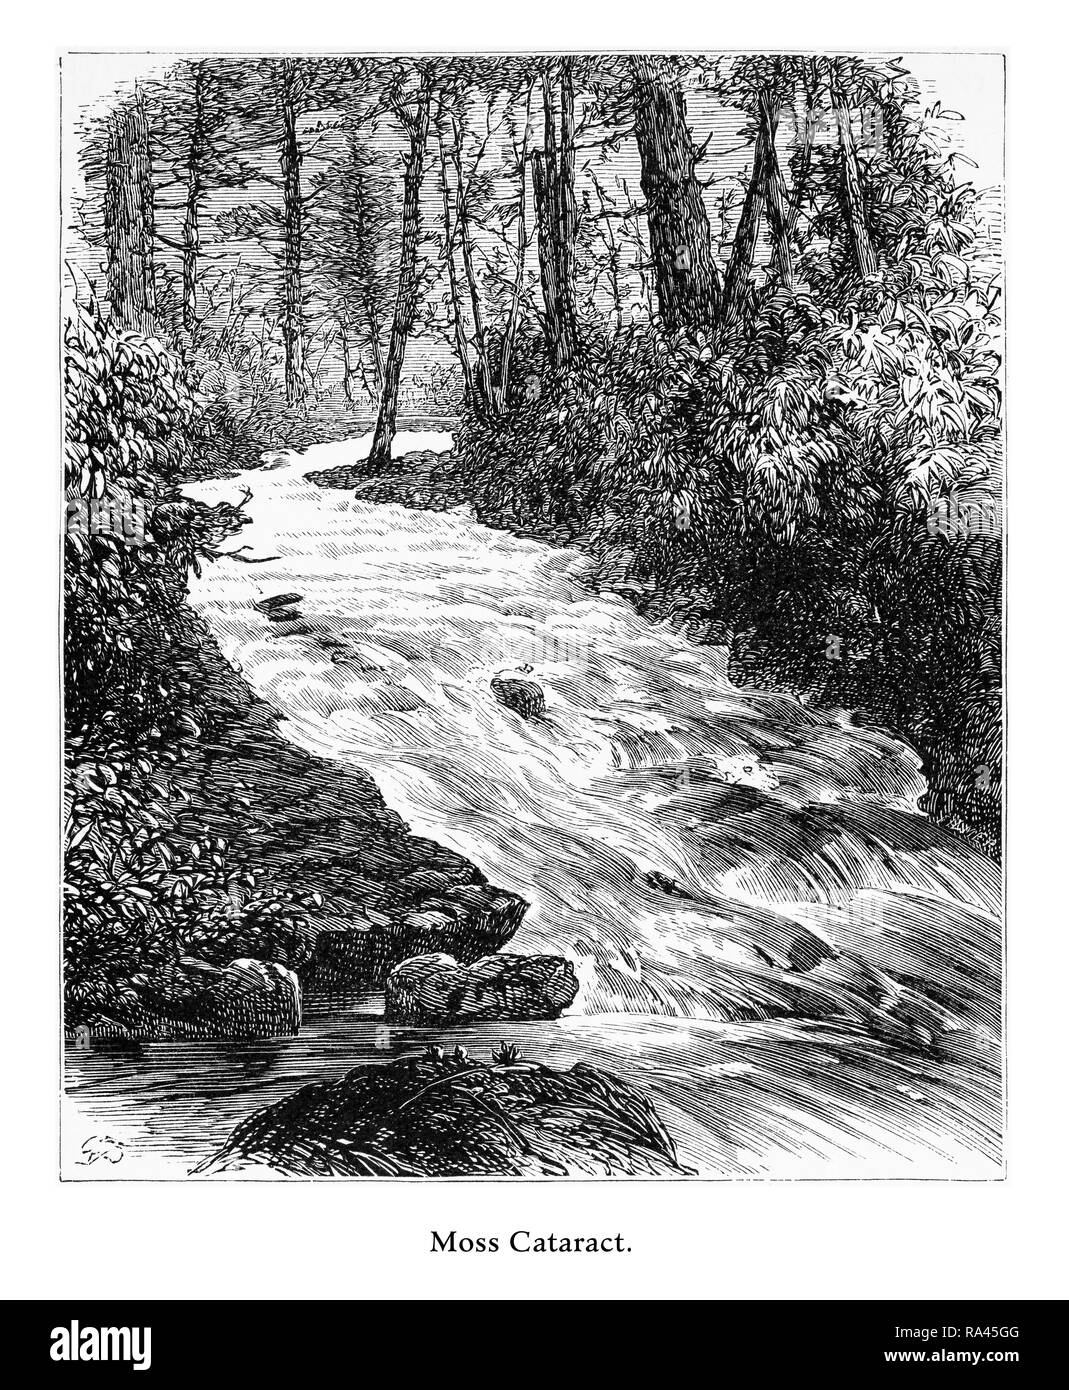 La Cataracte Moss, Rivière Delaware Water Gap, Pennsylvania, United States, American Victorian gravure, 1872 Banque D'Images